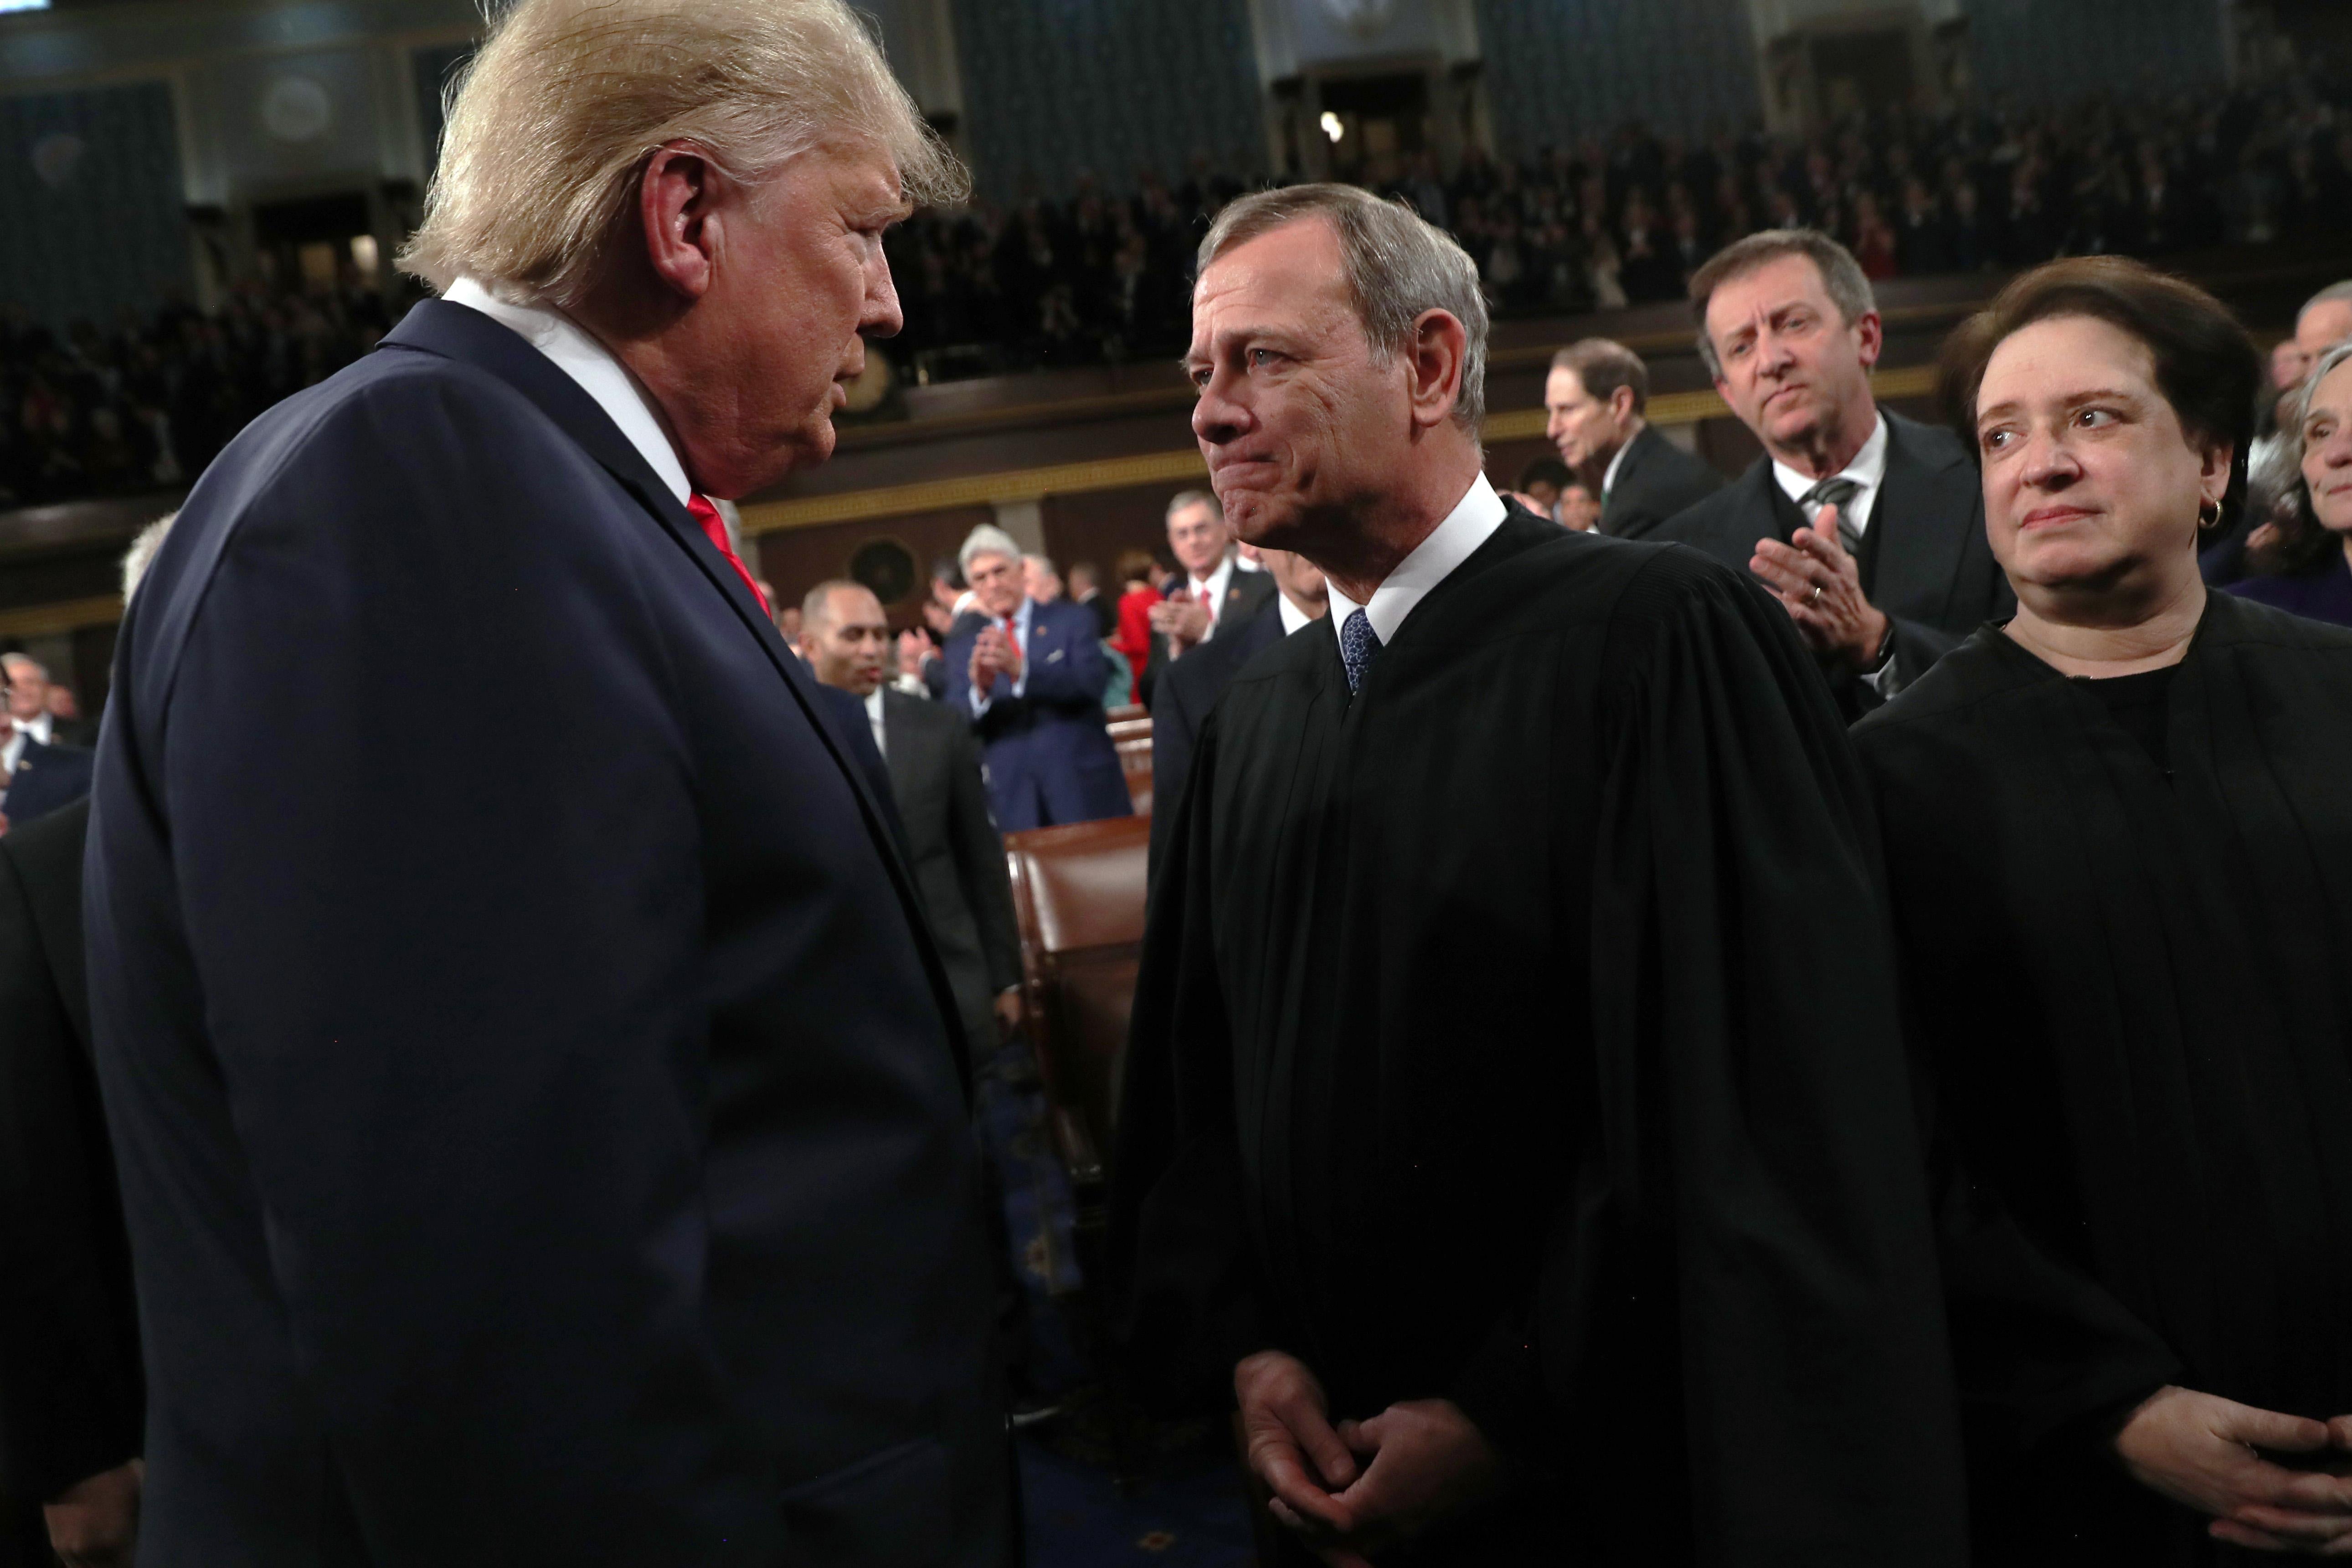 Trump looking like he's staring down Roberts as Kagan looks on.